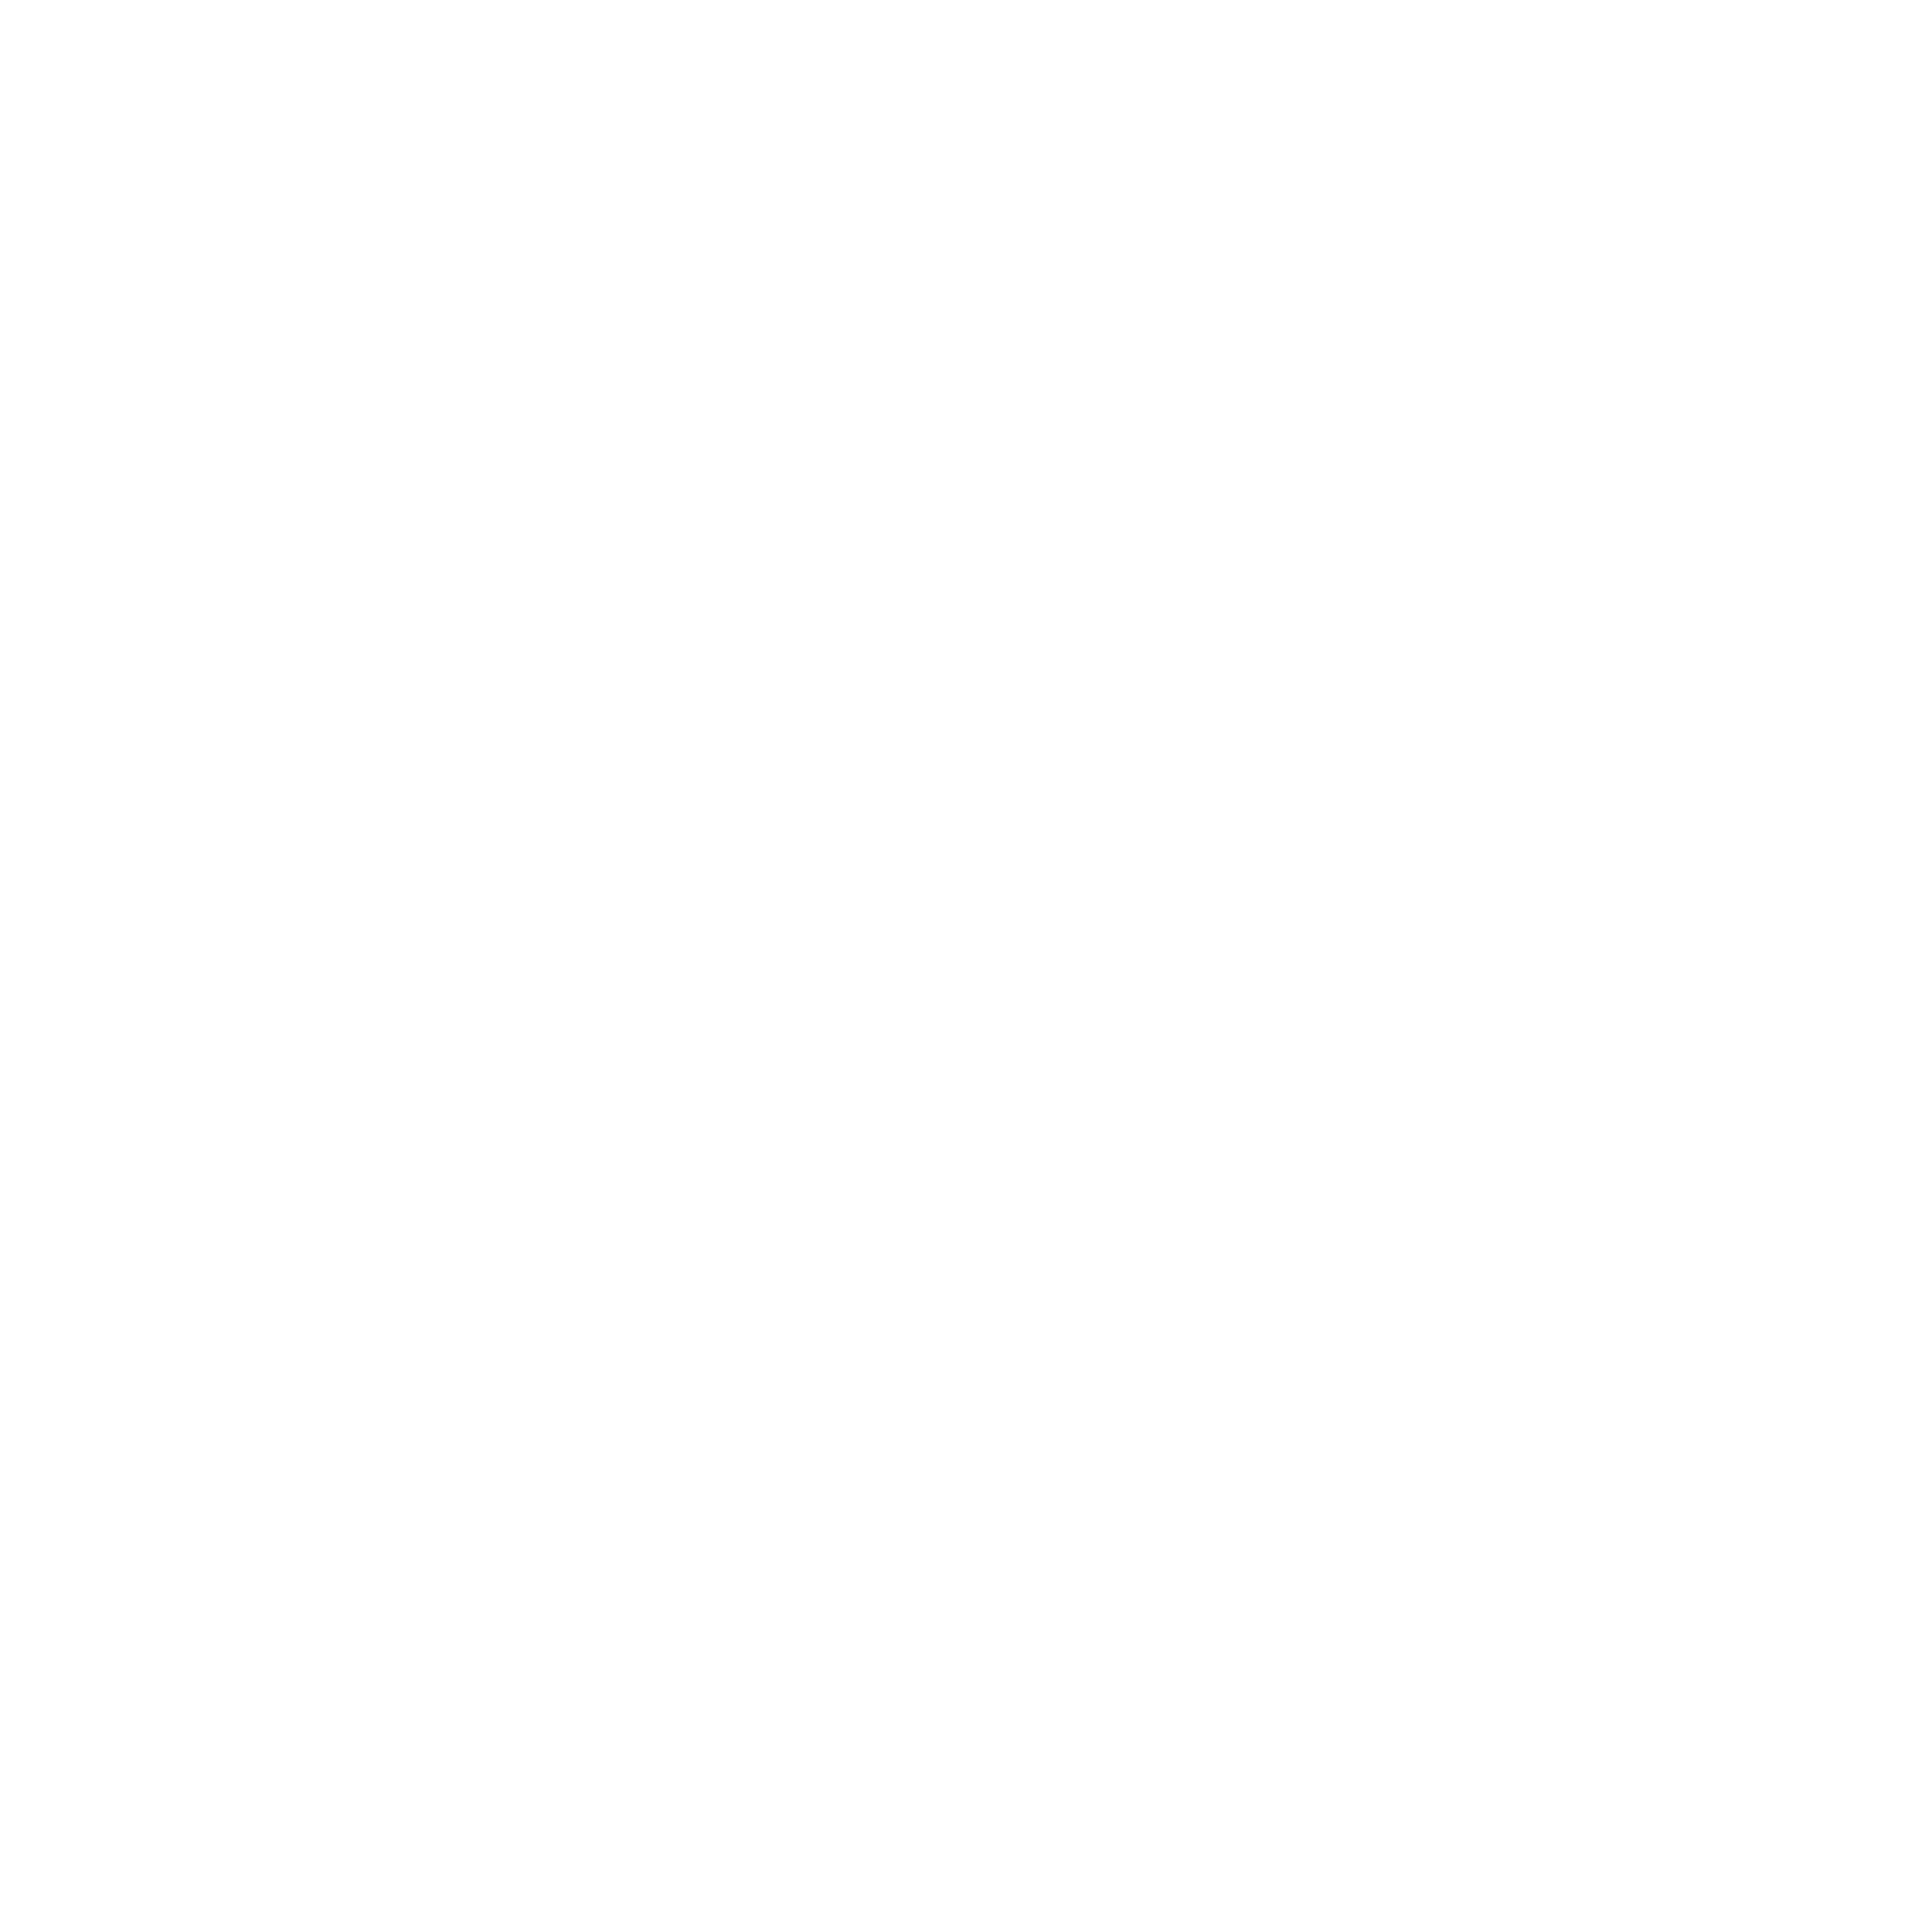 safeblock